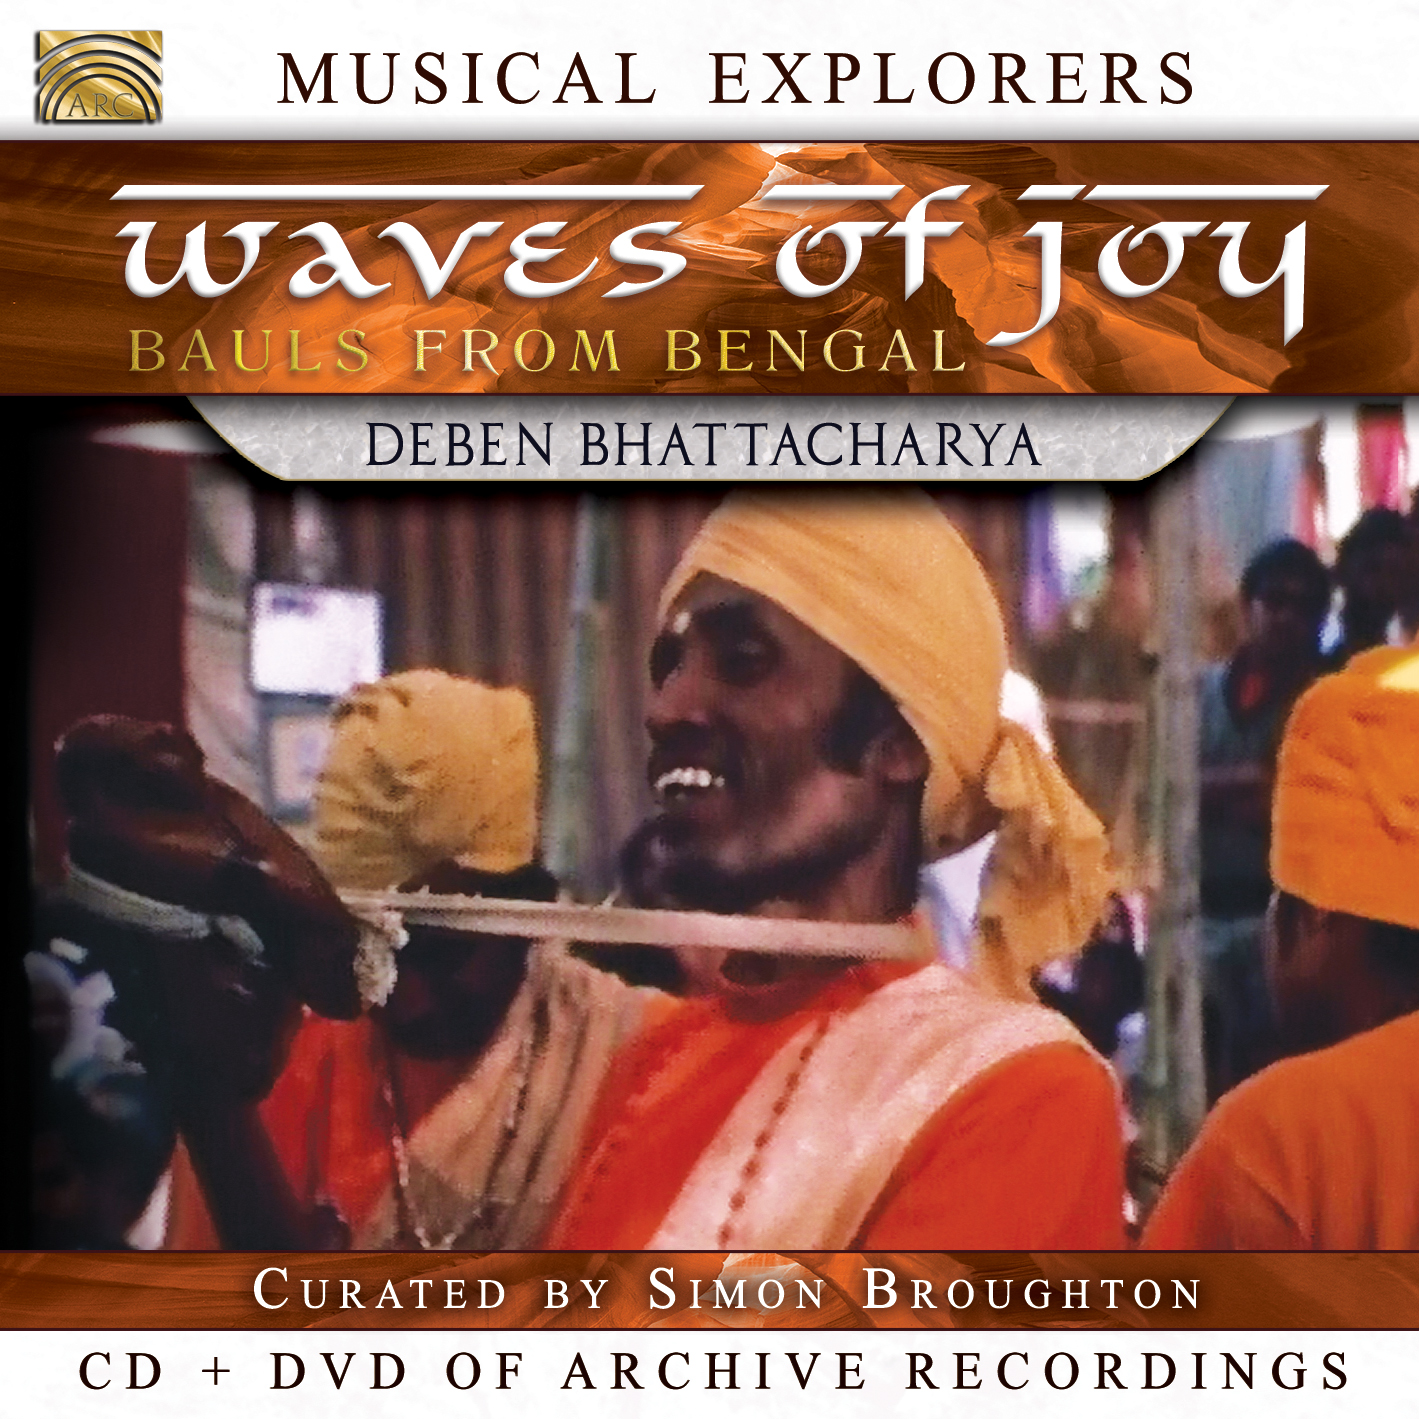 EUCD2791 Musical Explorers - Waves of Joy - Bauls of Bengal